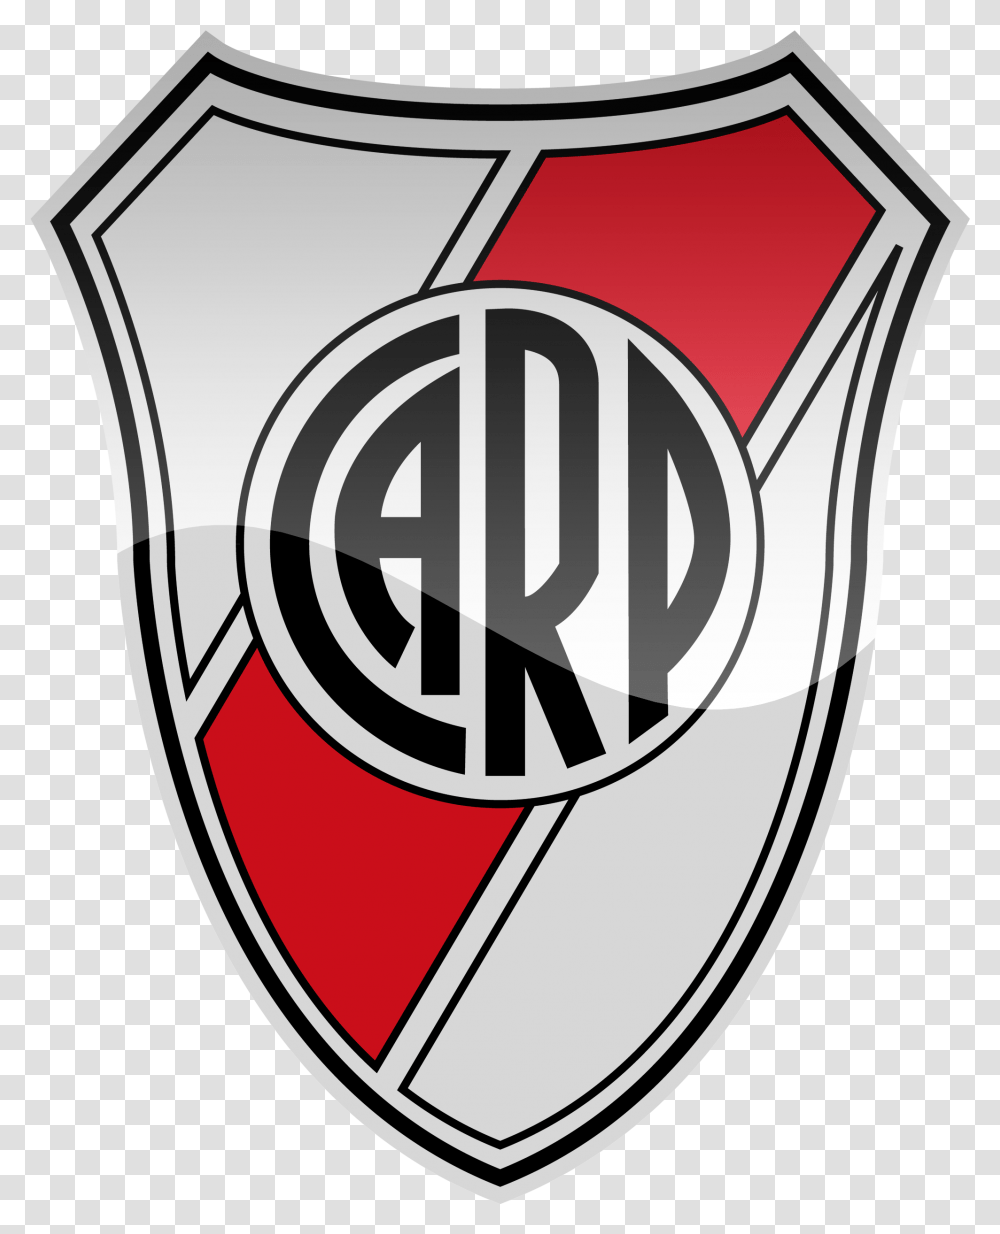 Ca River Plate Hd Logo Football Logos Club Atltico River Plate, Armor, Shield Transparent Png